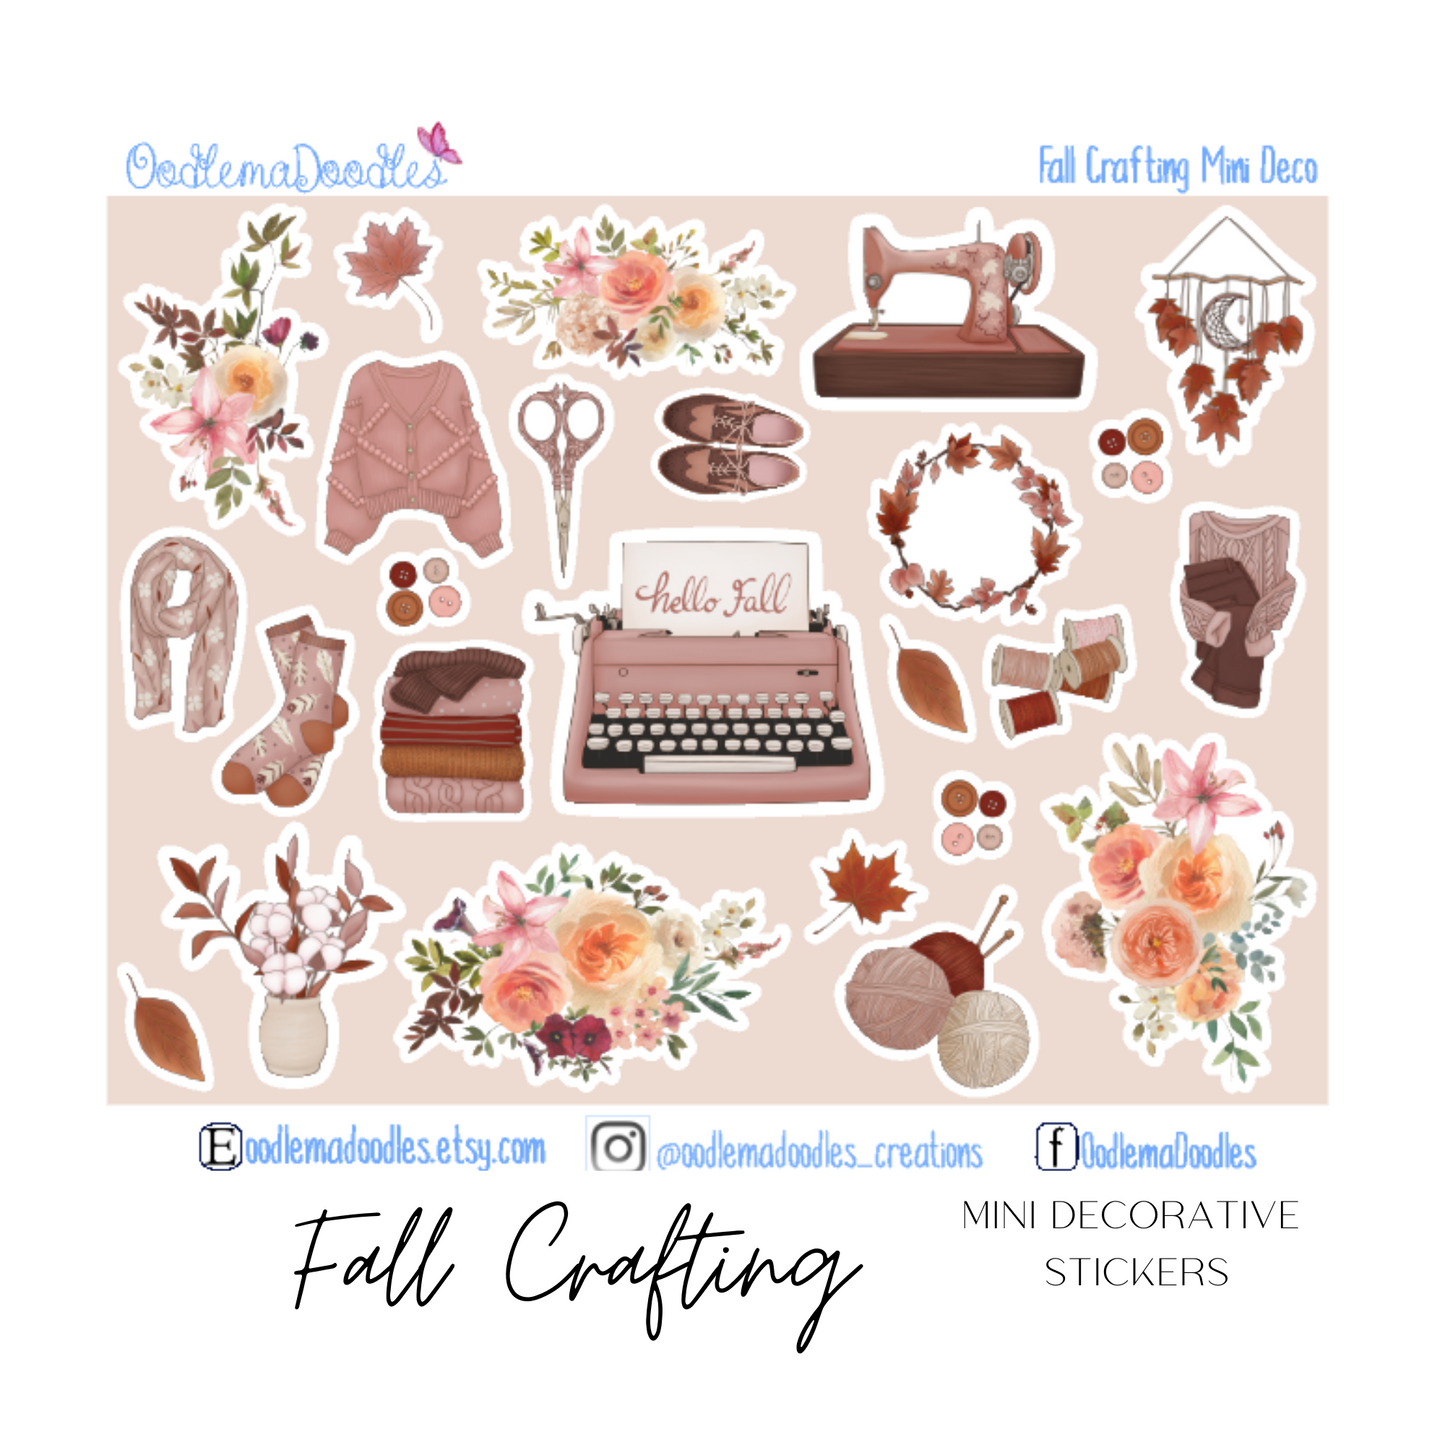 Fall Crafting Mini Decorative Stickers